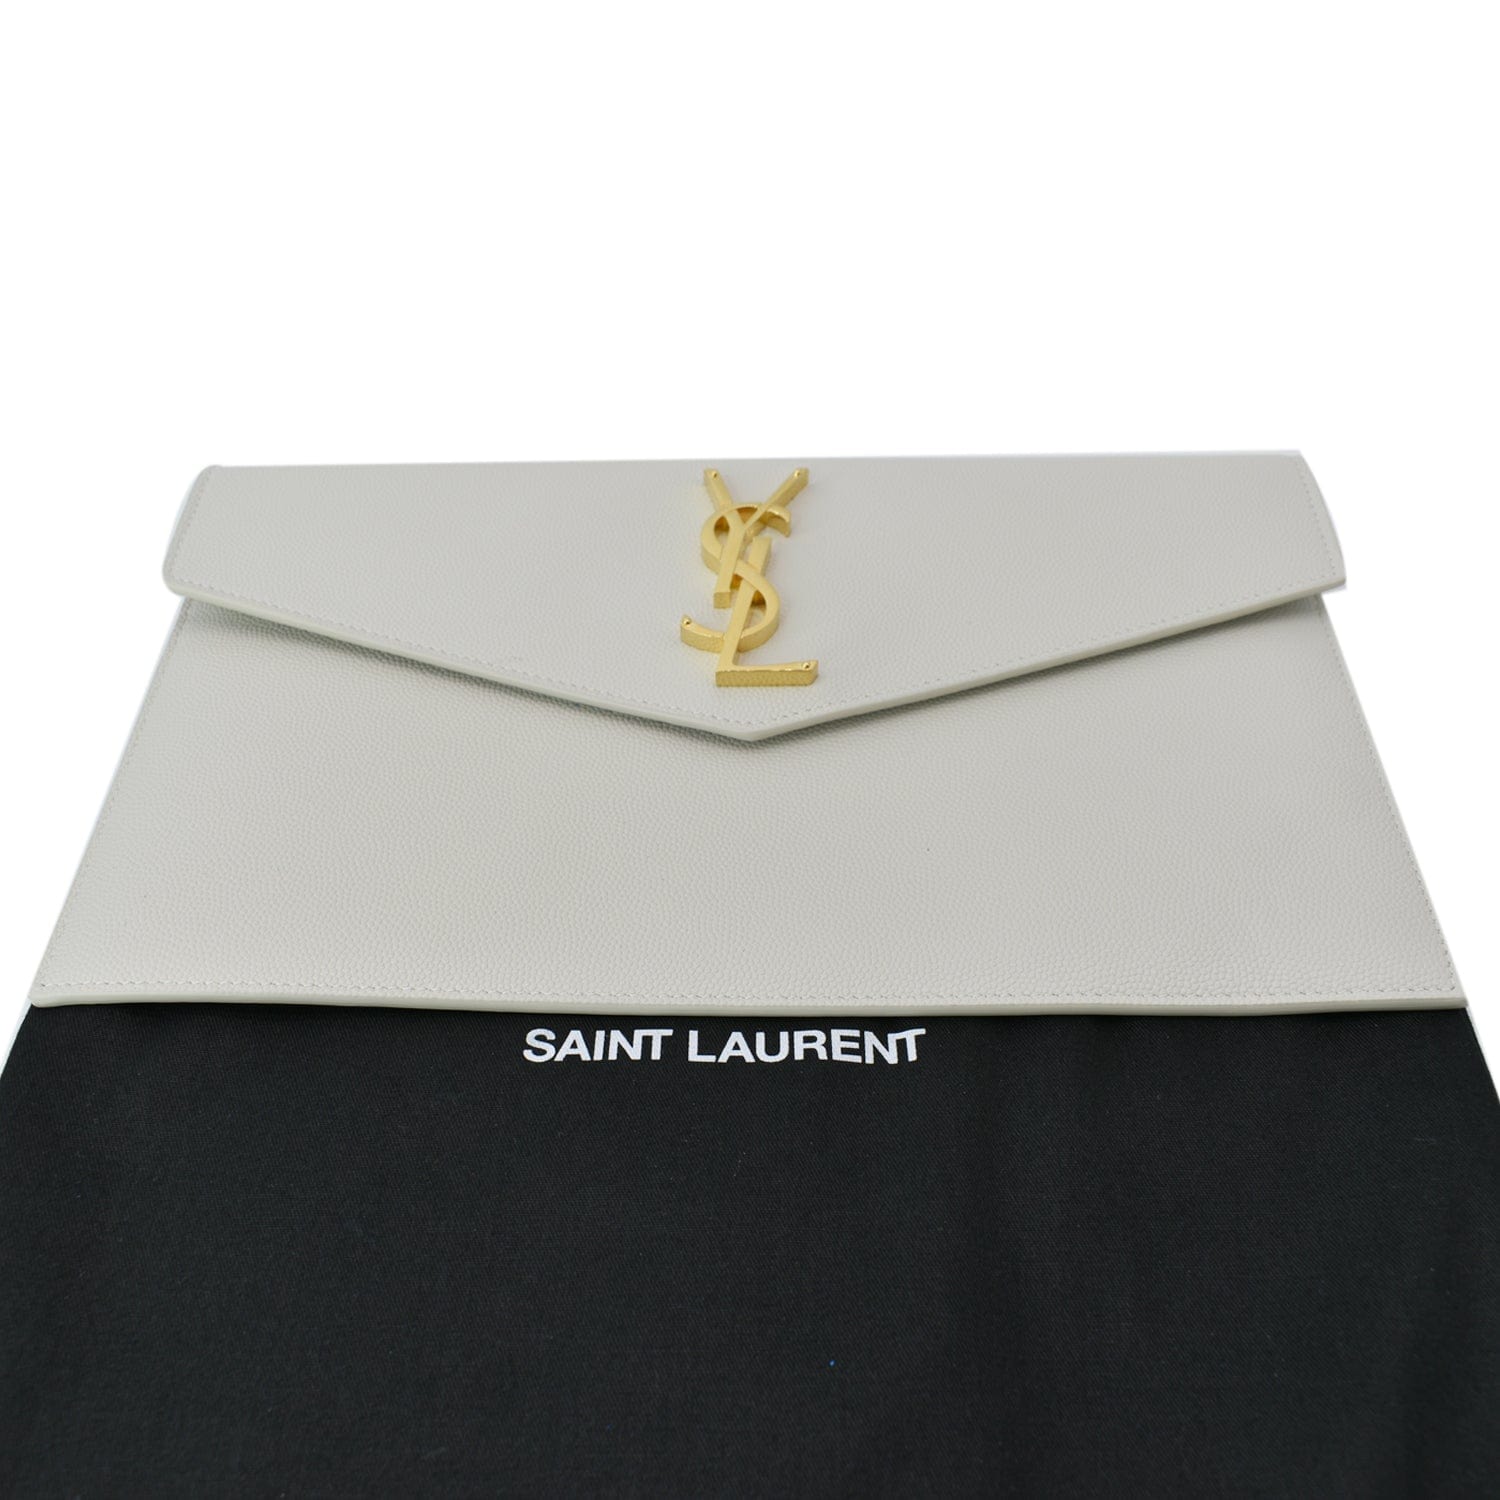 Saint Laurent Uptown Leather Clutch White